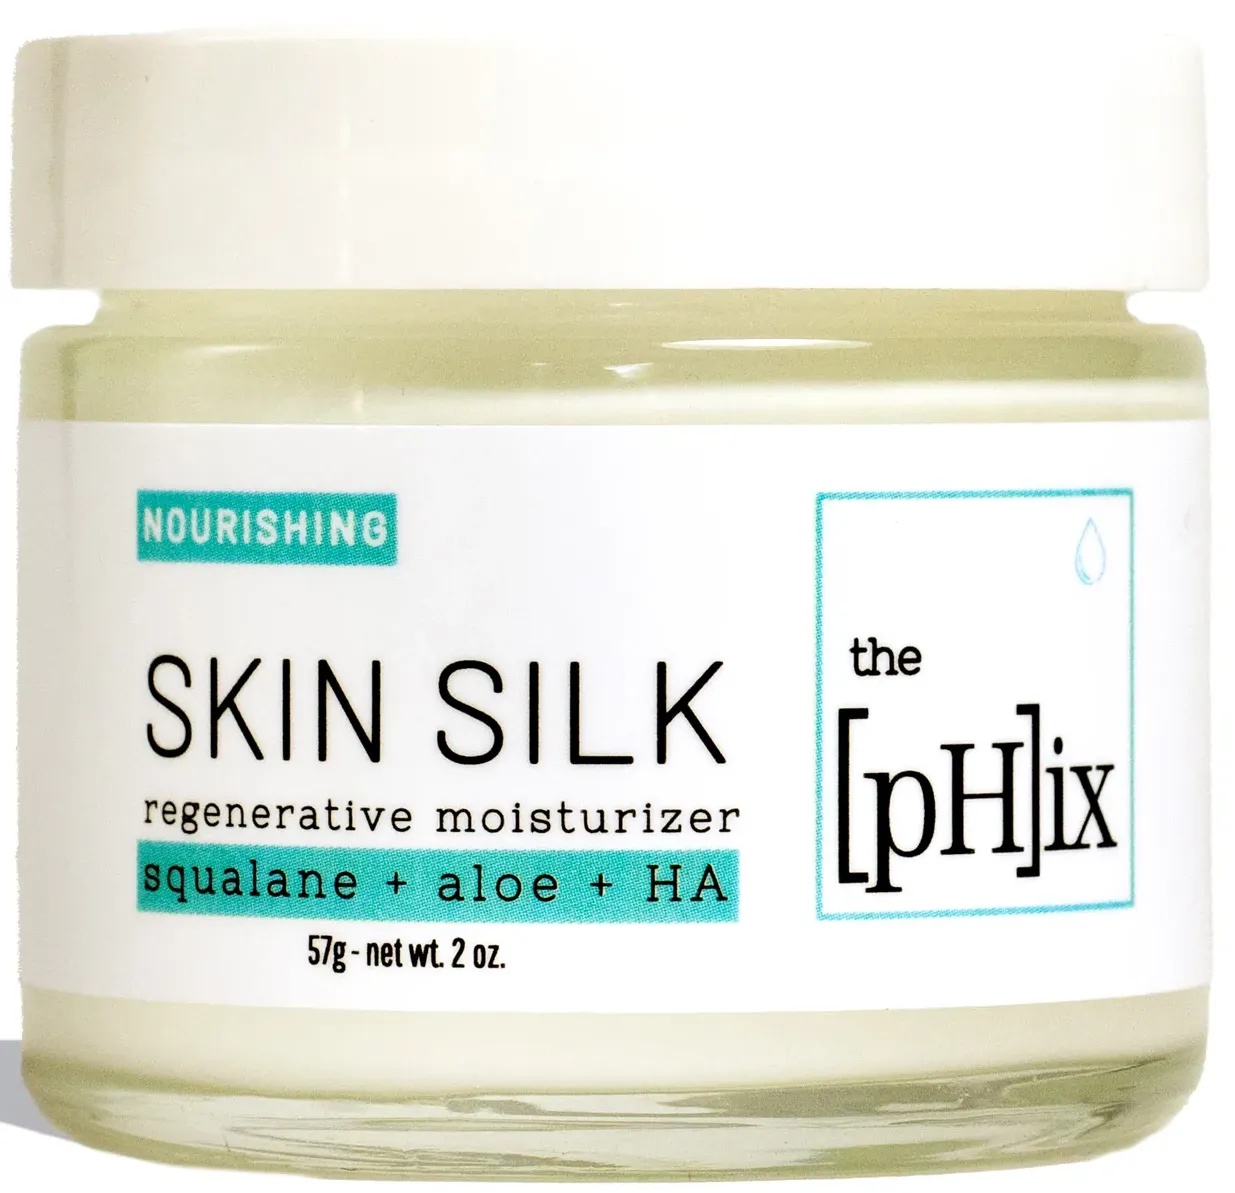 the [pH]ix Skin Silk Regenerative Moisturizer